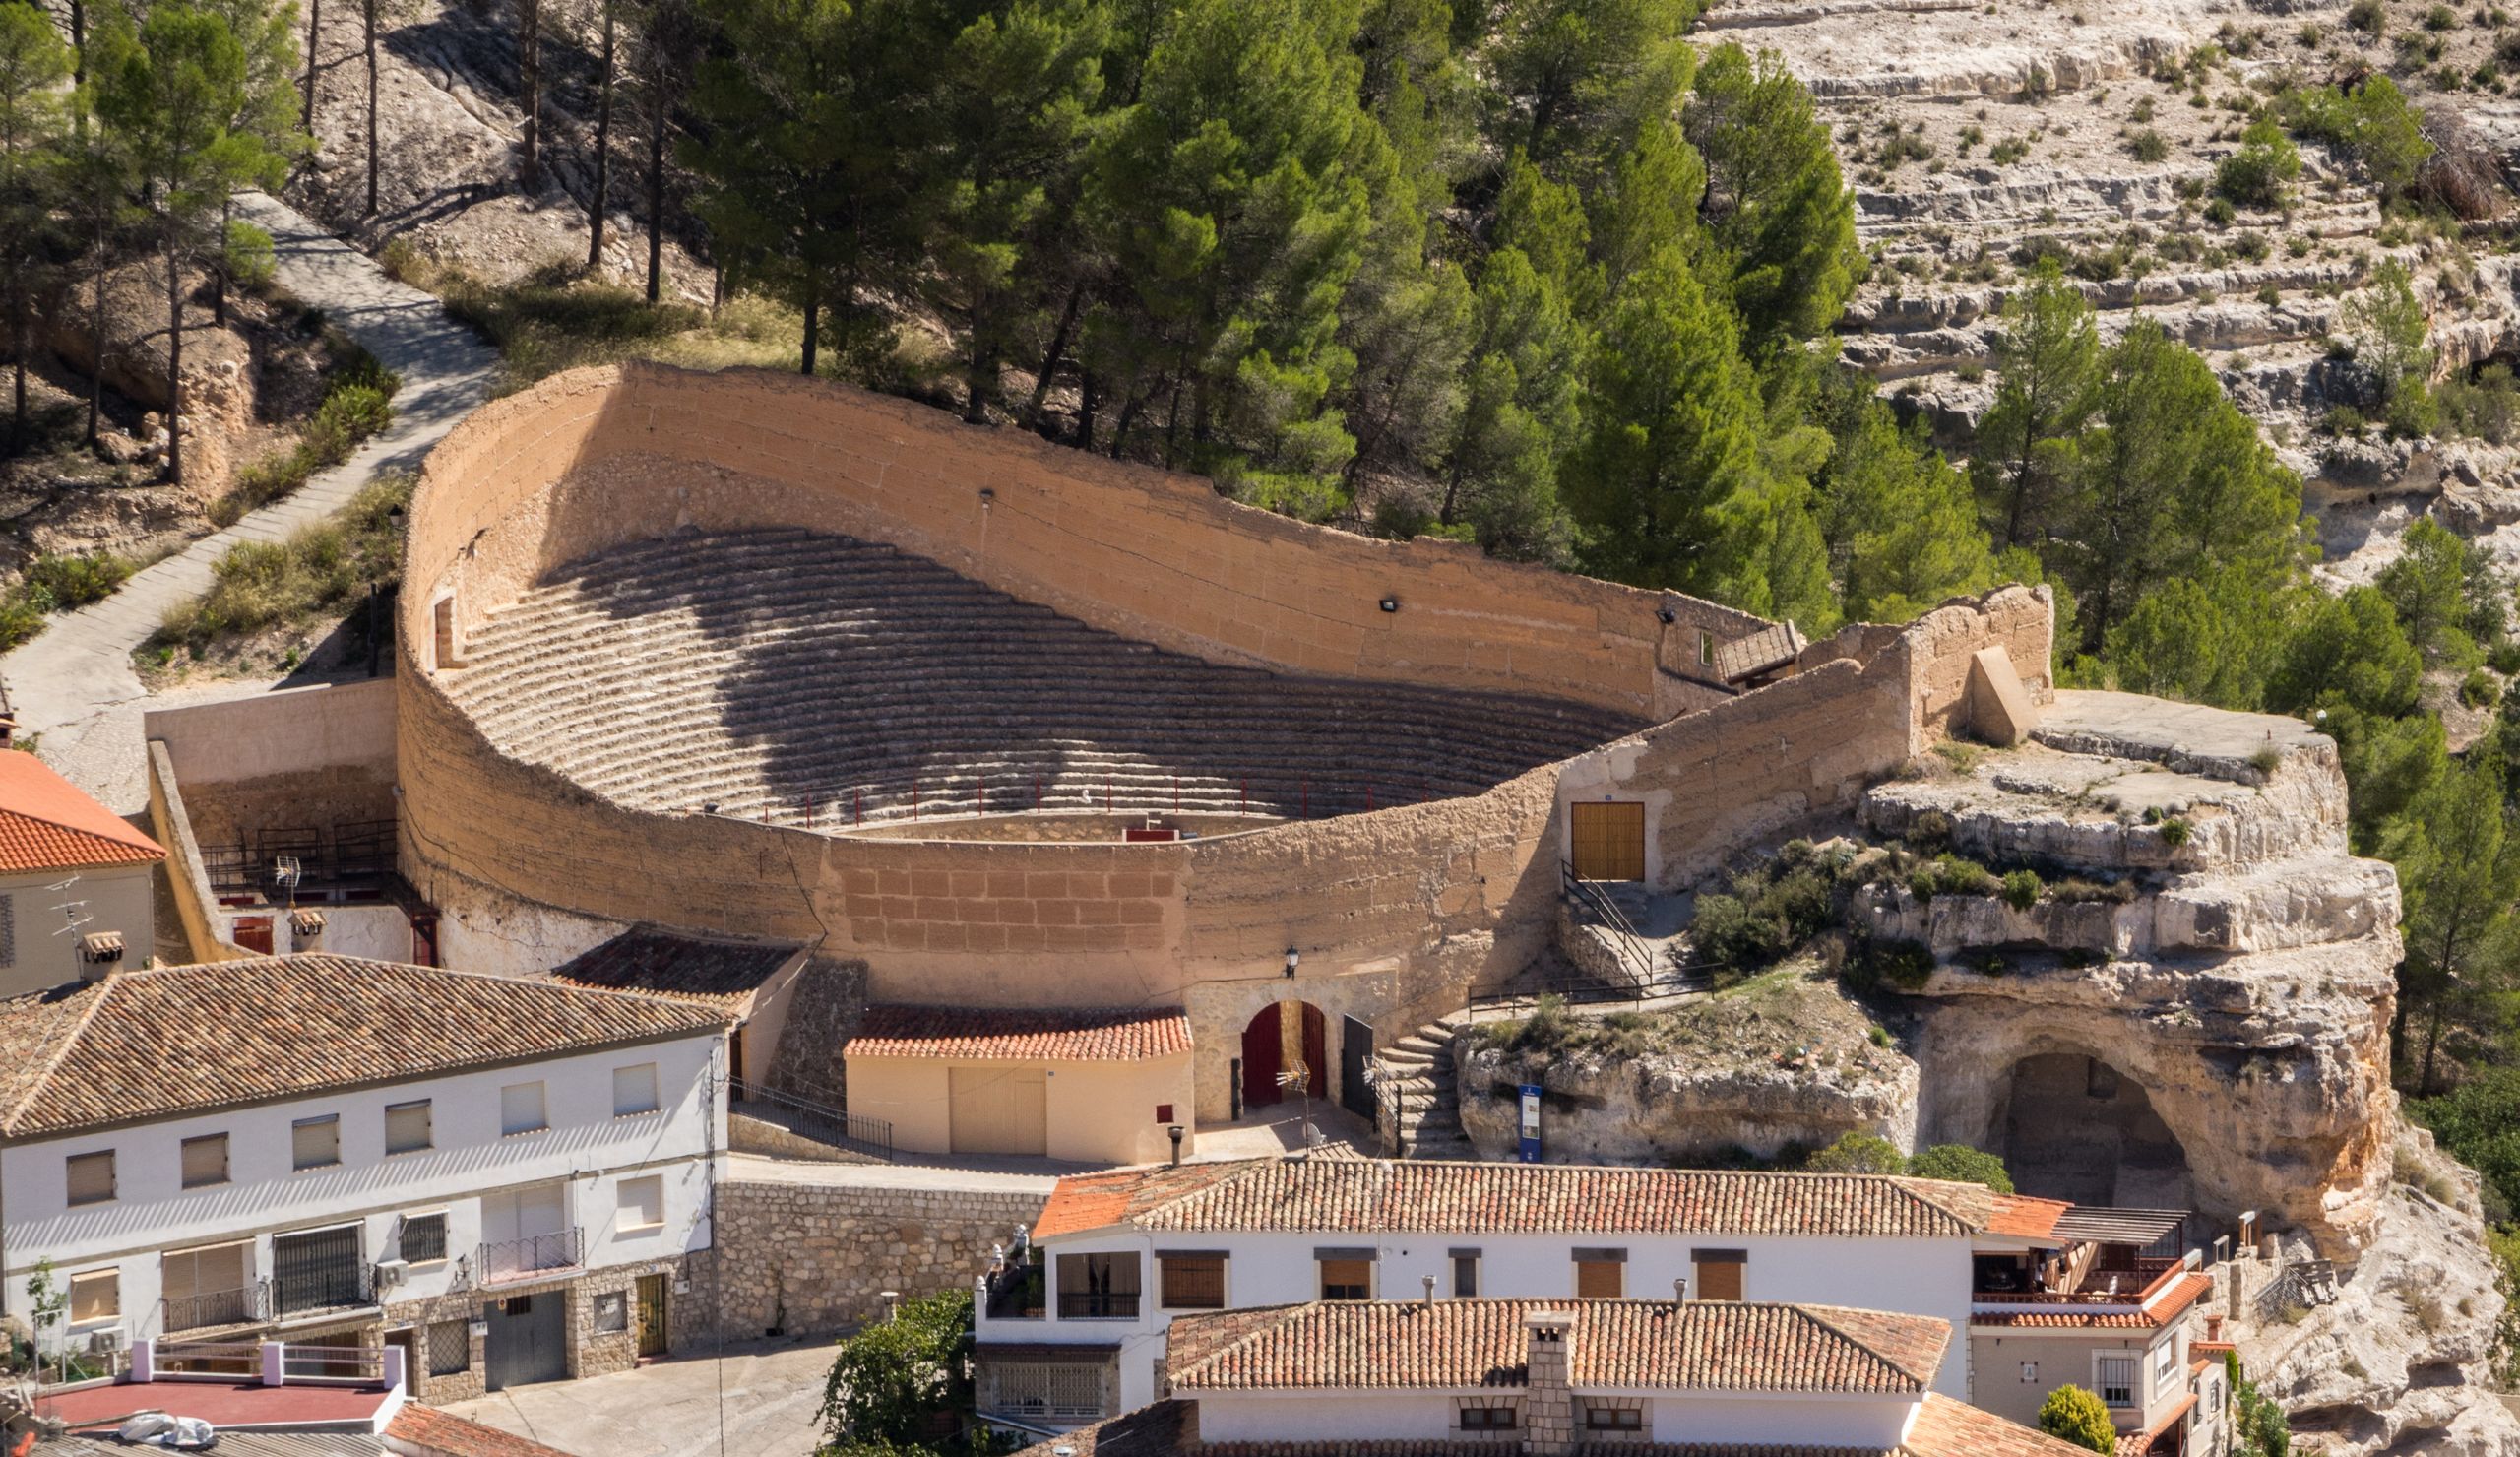 Anfiteatro antiguo en paisaje urbano español.